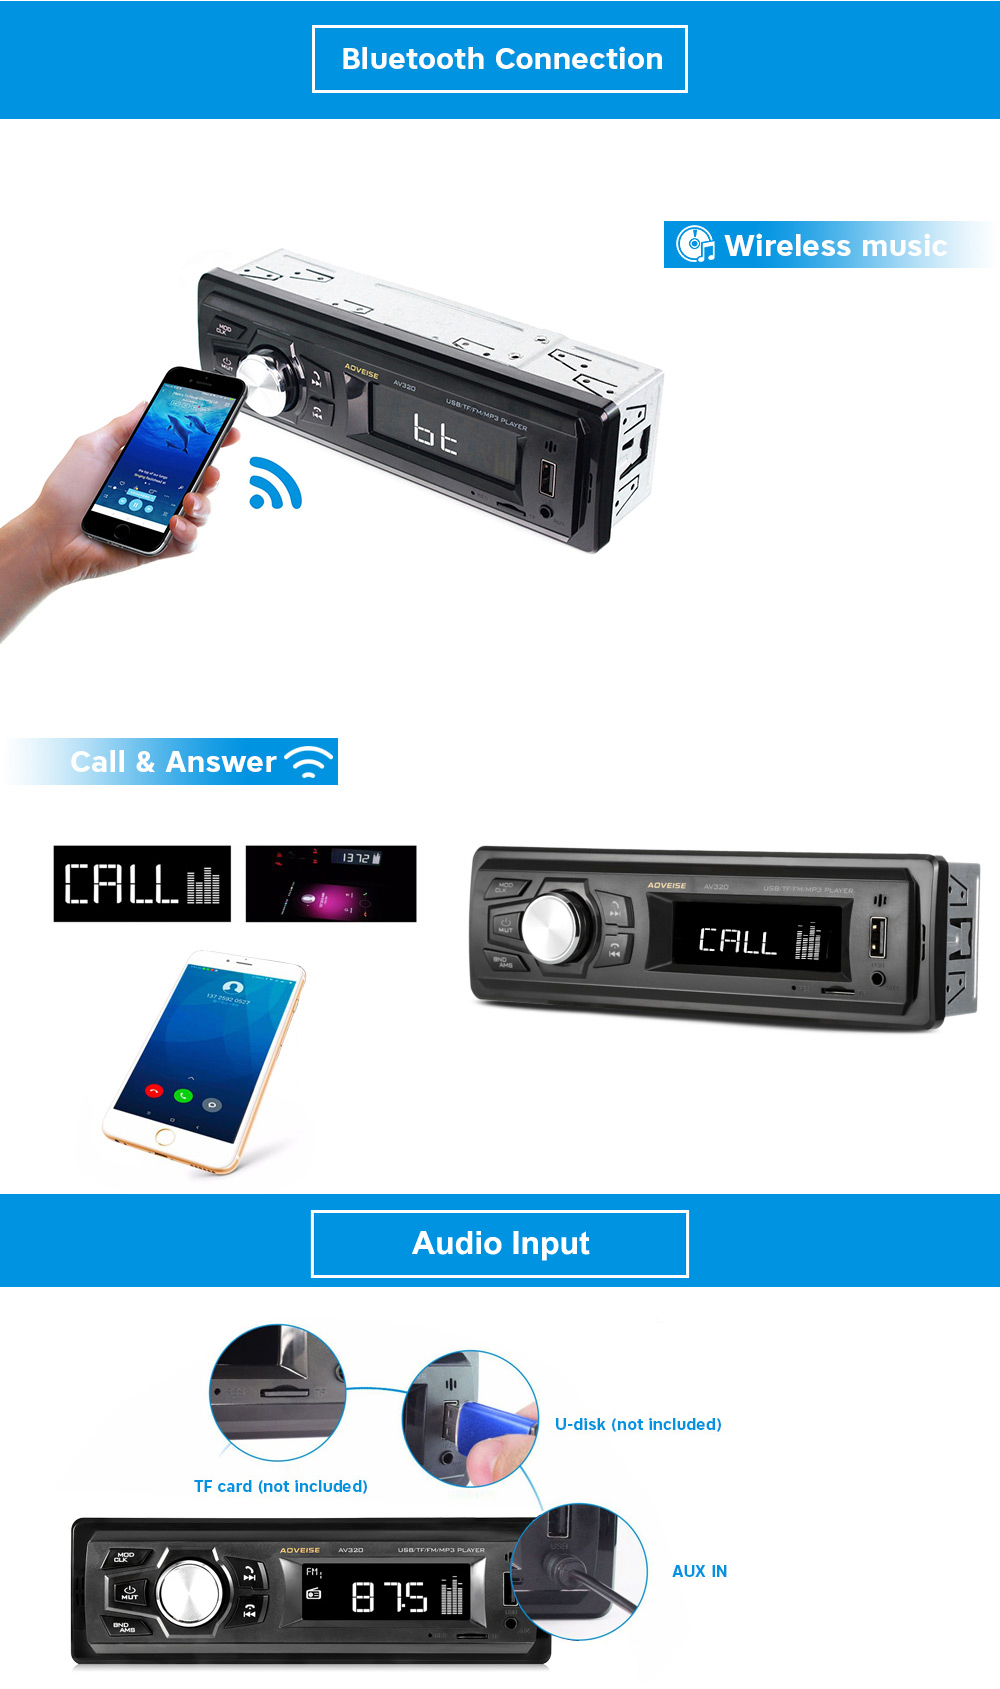 AOVEISE AV320 2.8 inch LCD Screen Car MP3 Player Bluetooth FM Radio